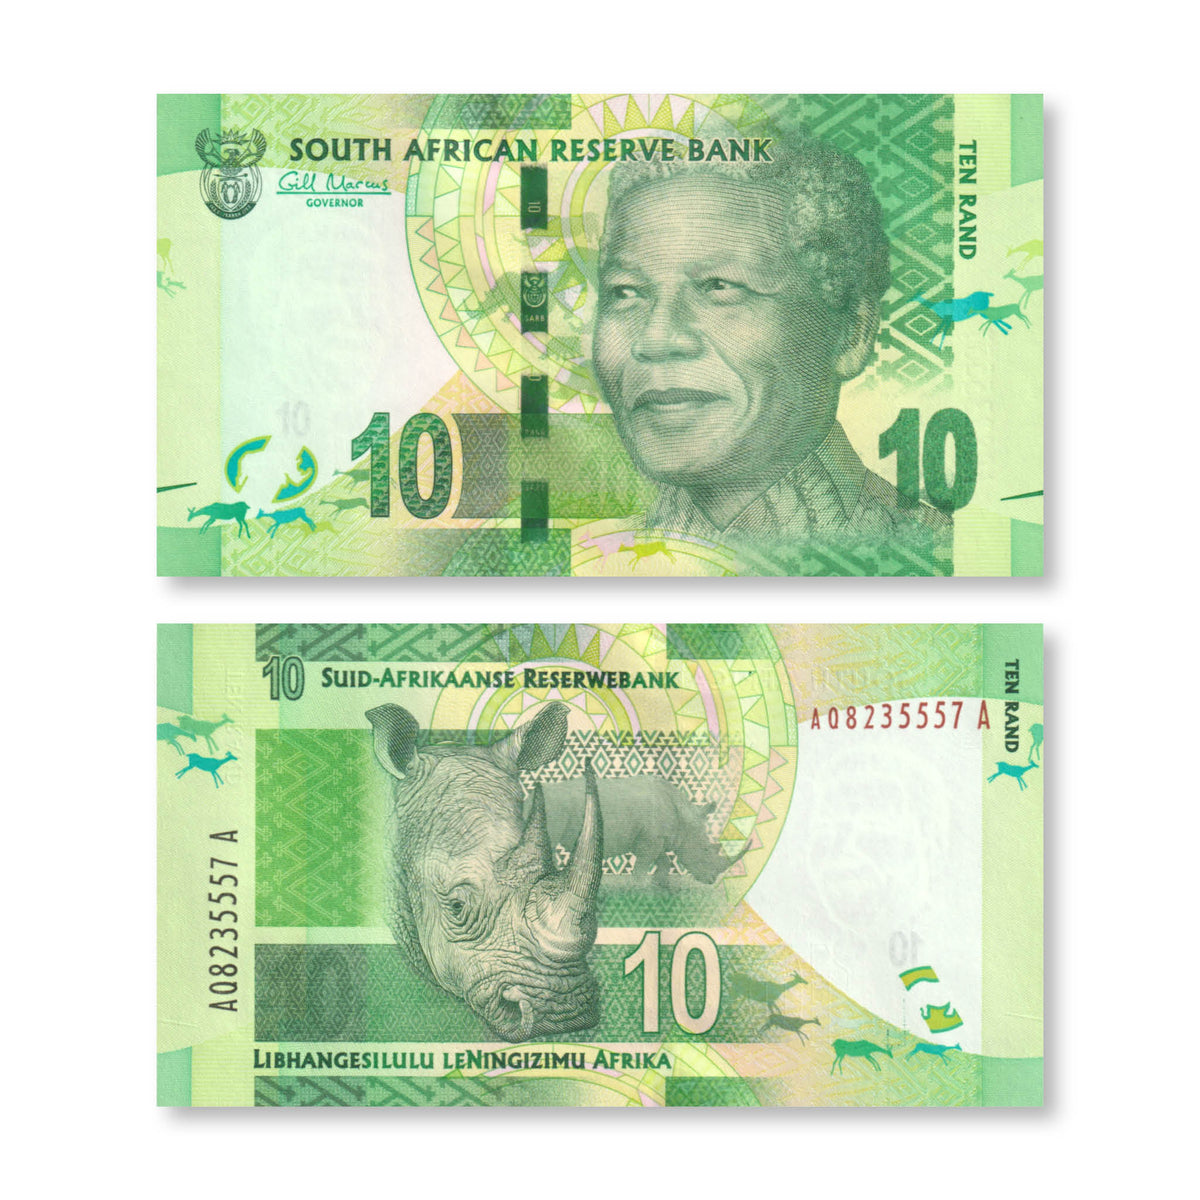 South Africa 10 Rand, 2012, B762a, P133, UNC - Robert's World Money - World Banknotes